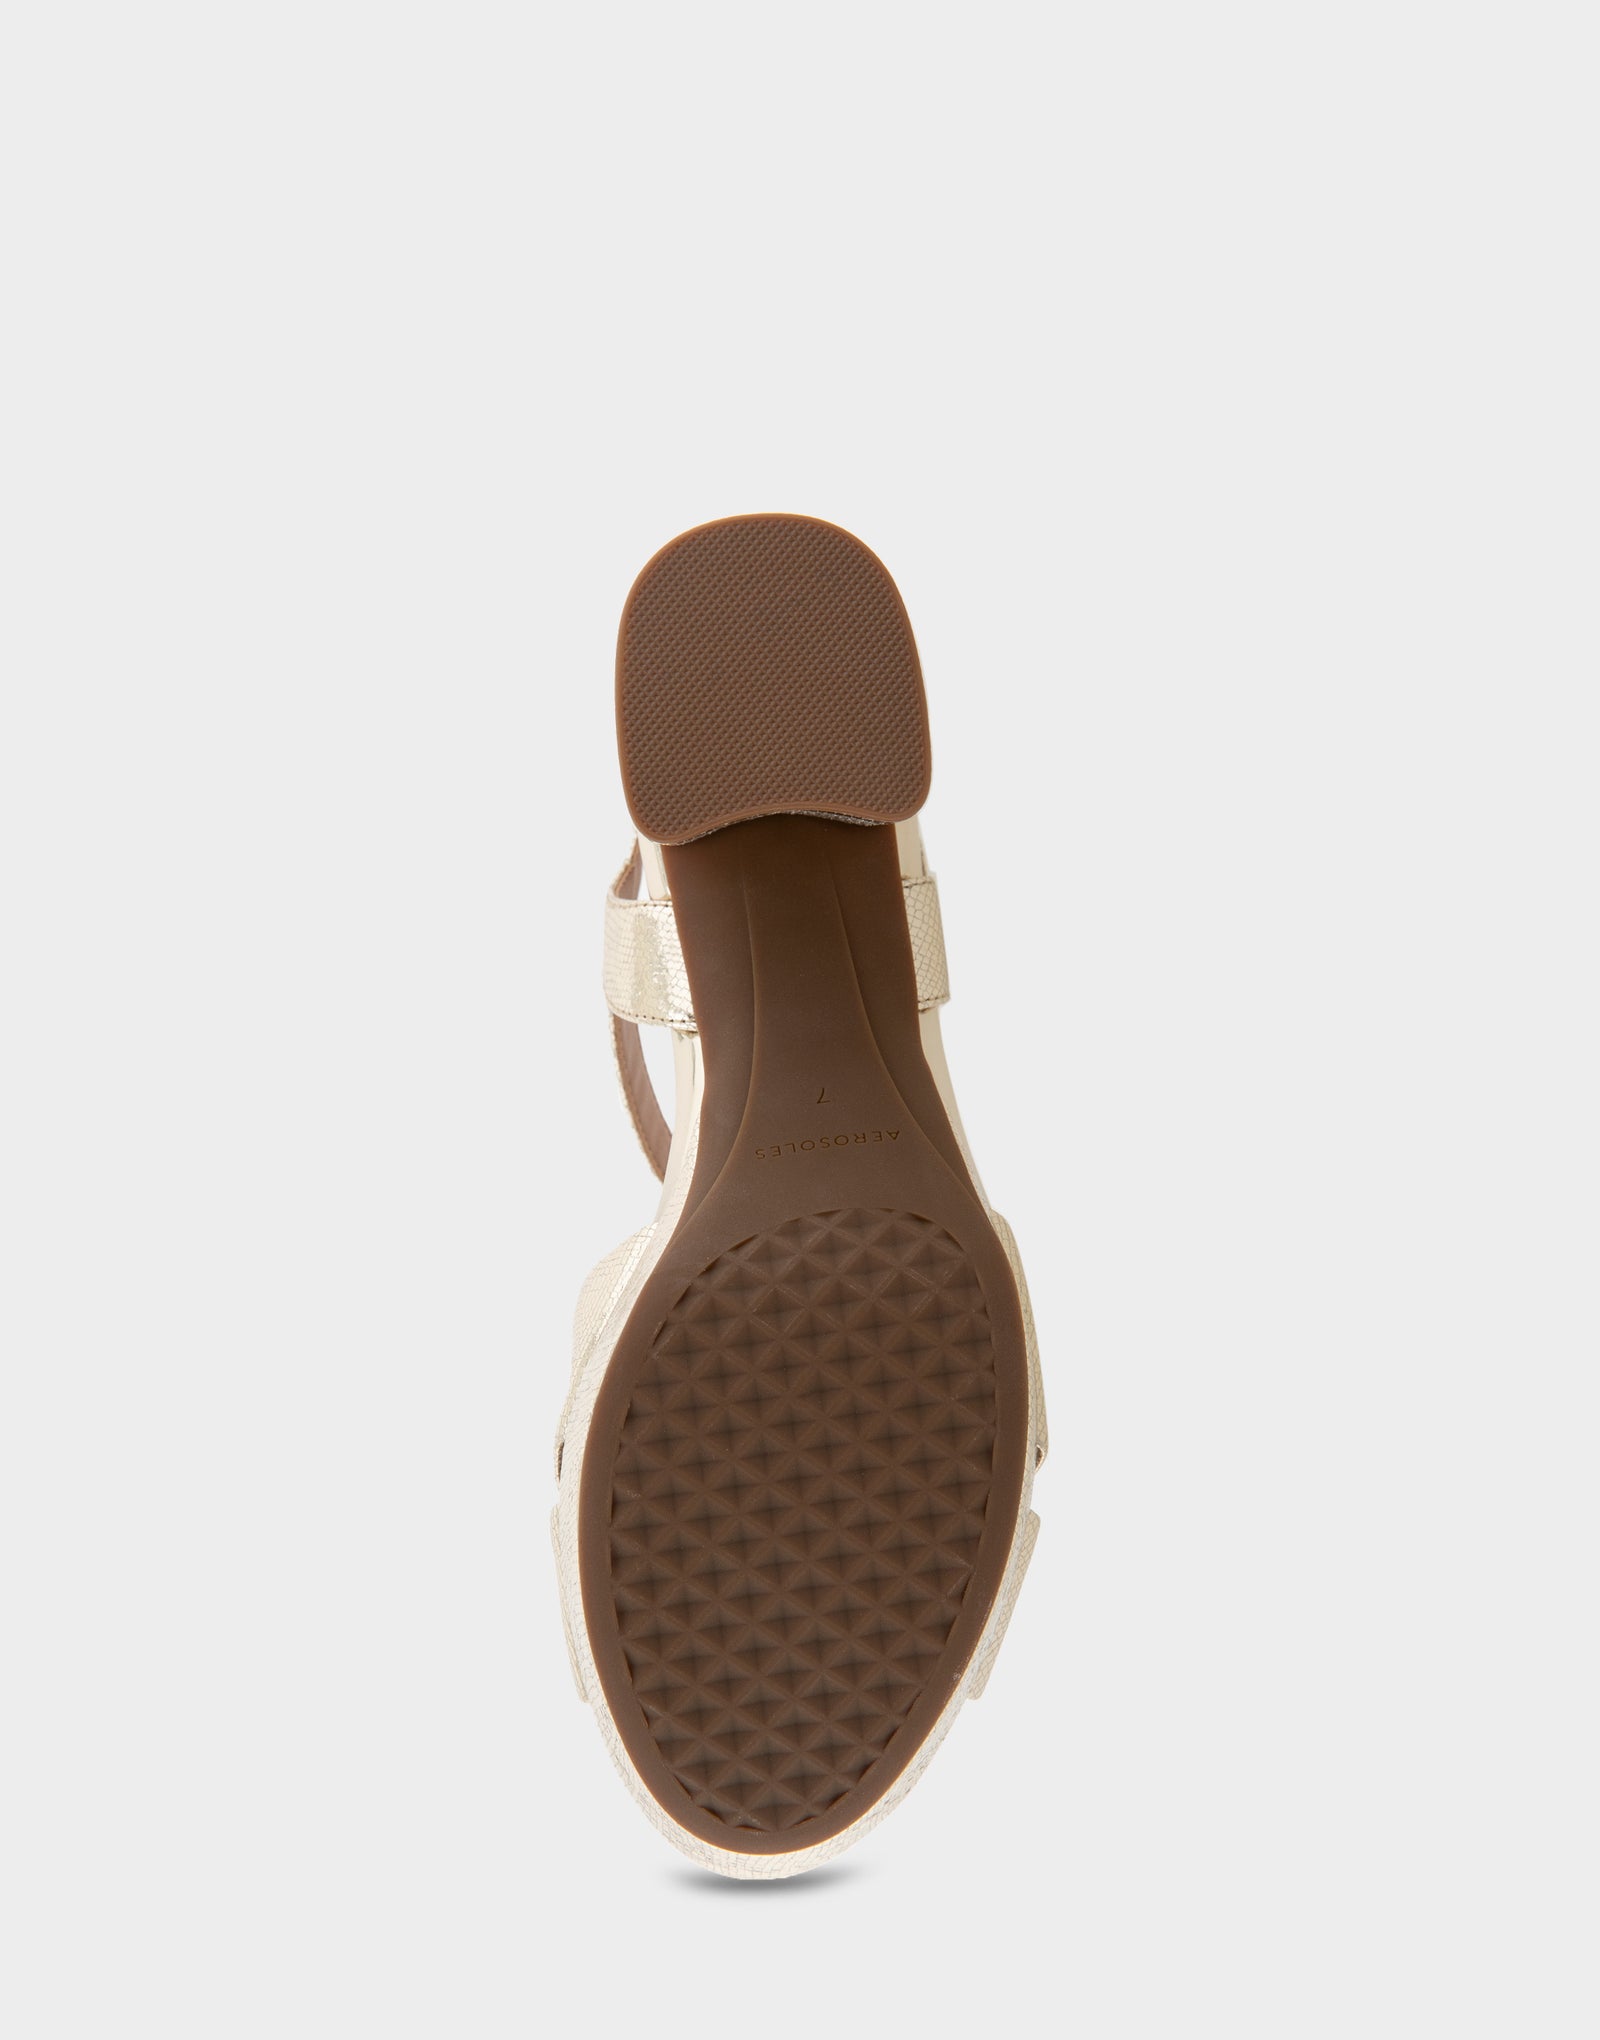 Women's Crisscross Platform Sandal in Gold Textured Metallic Leather